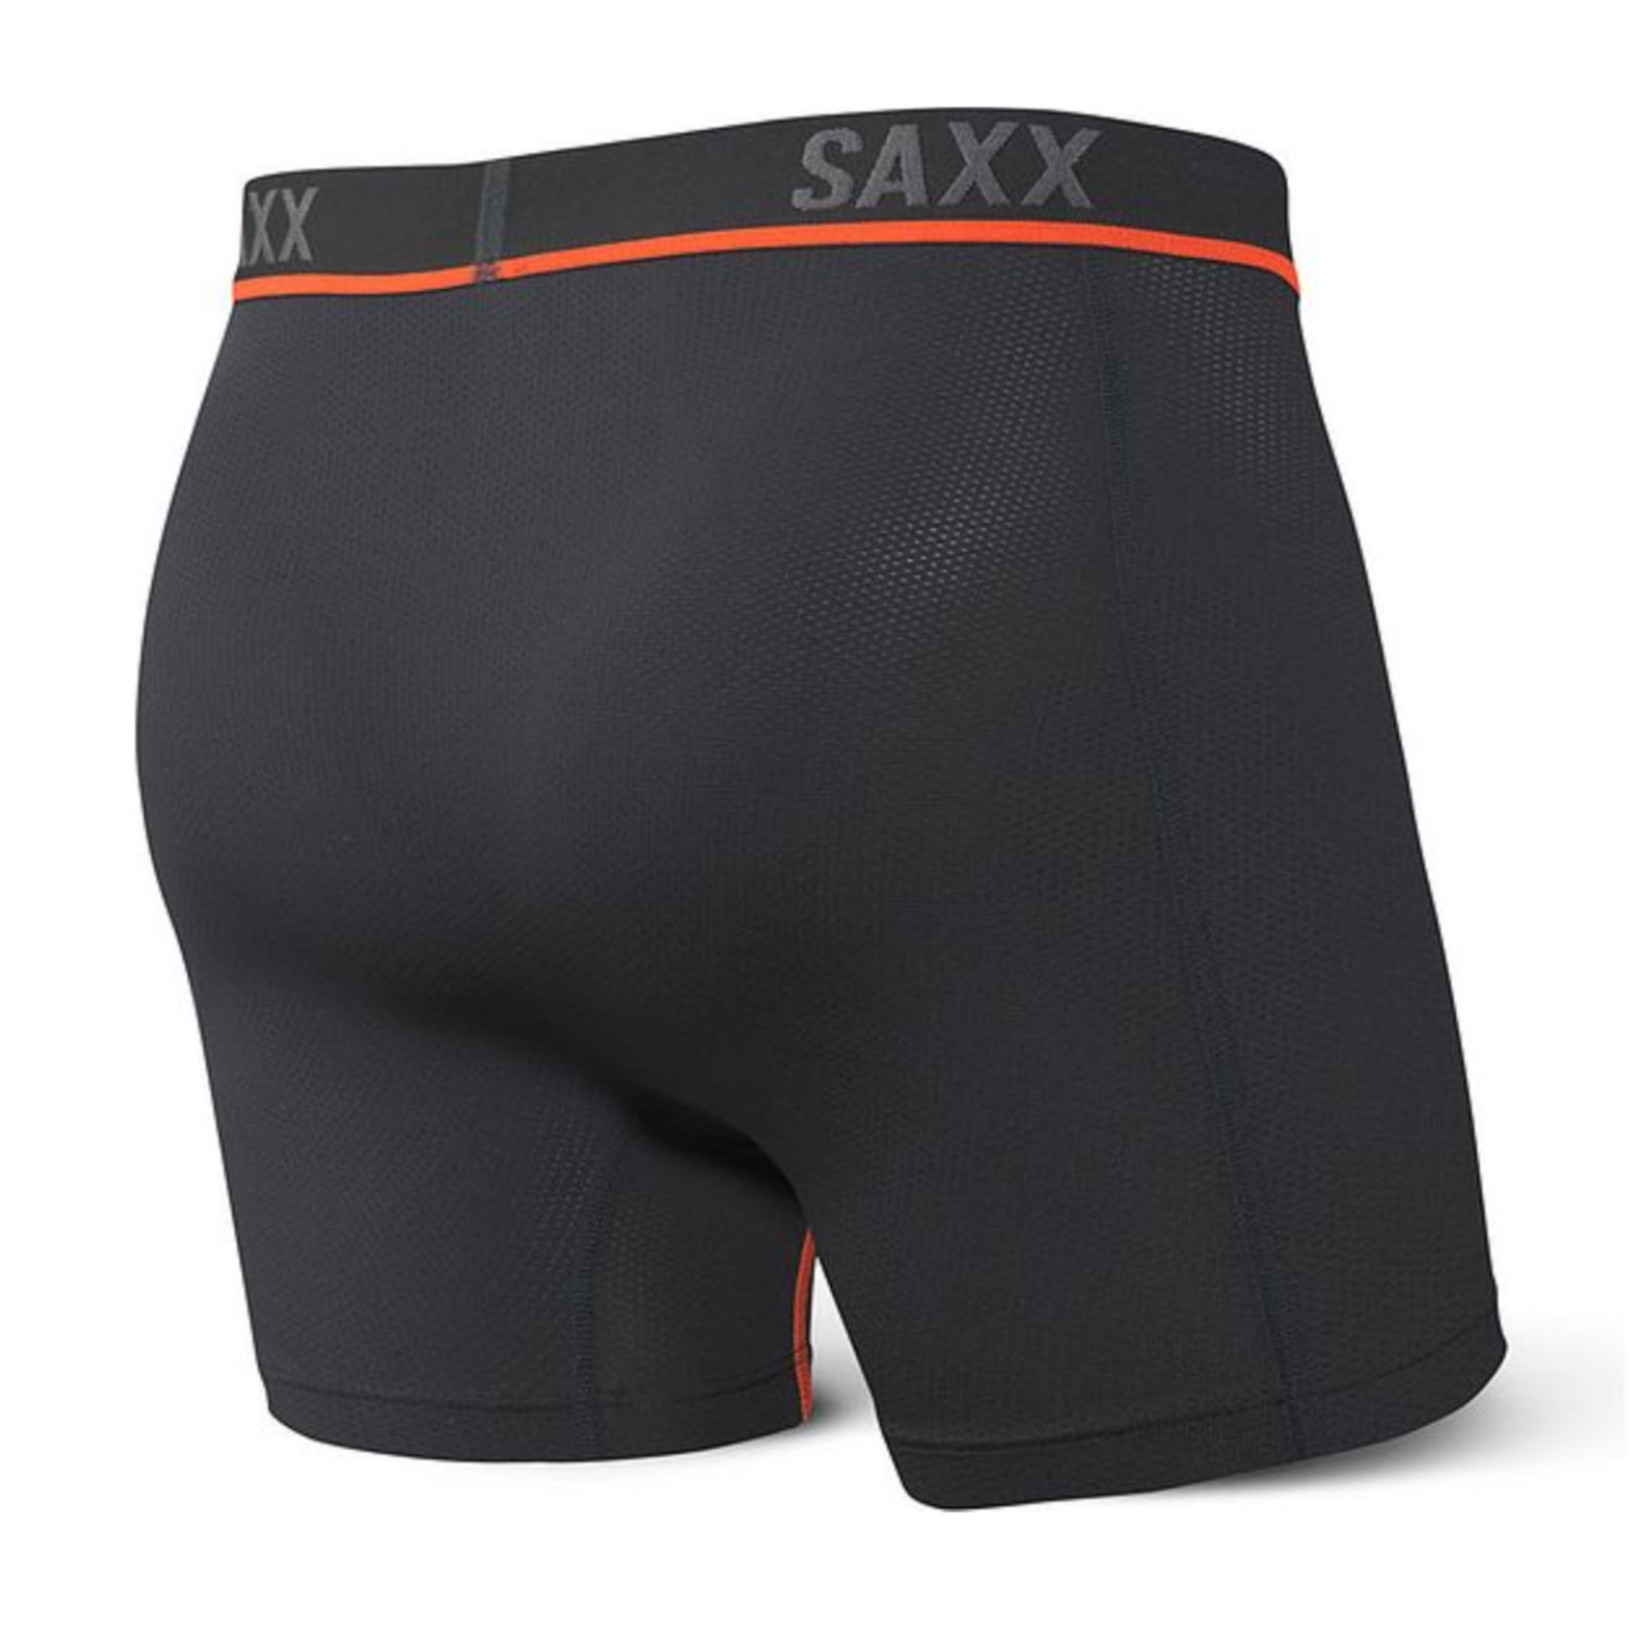 SAXX SAXX Kinetic Boxer Brief SXBB32 BVR